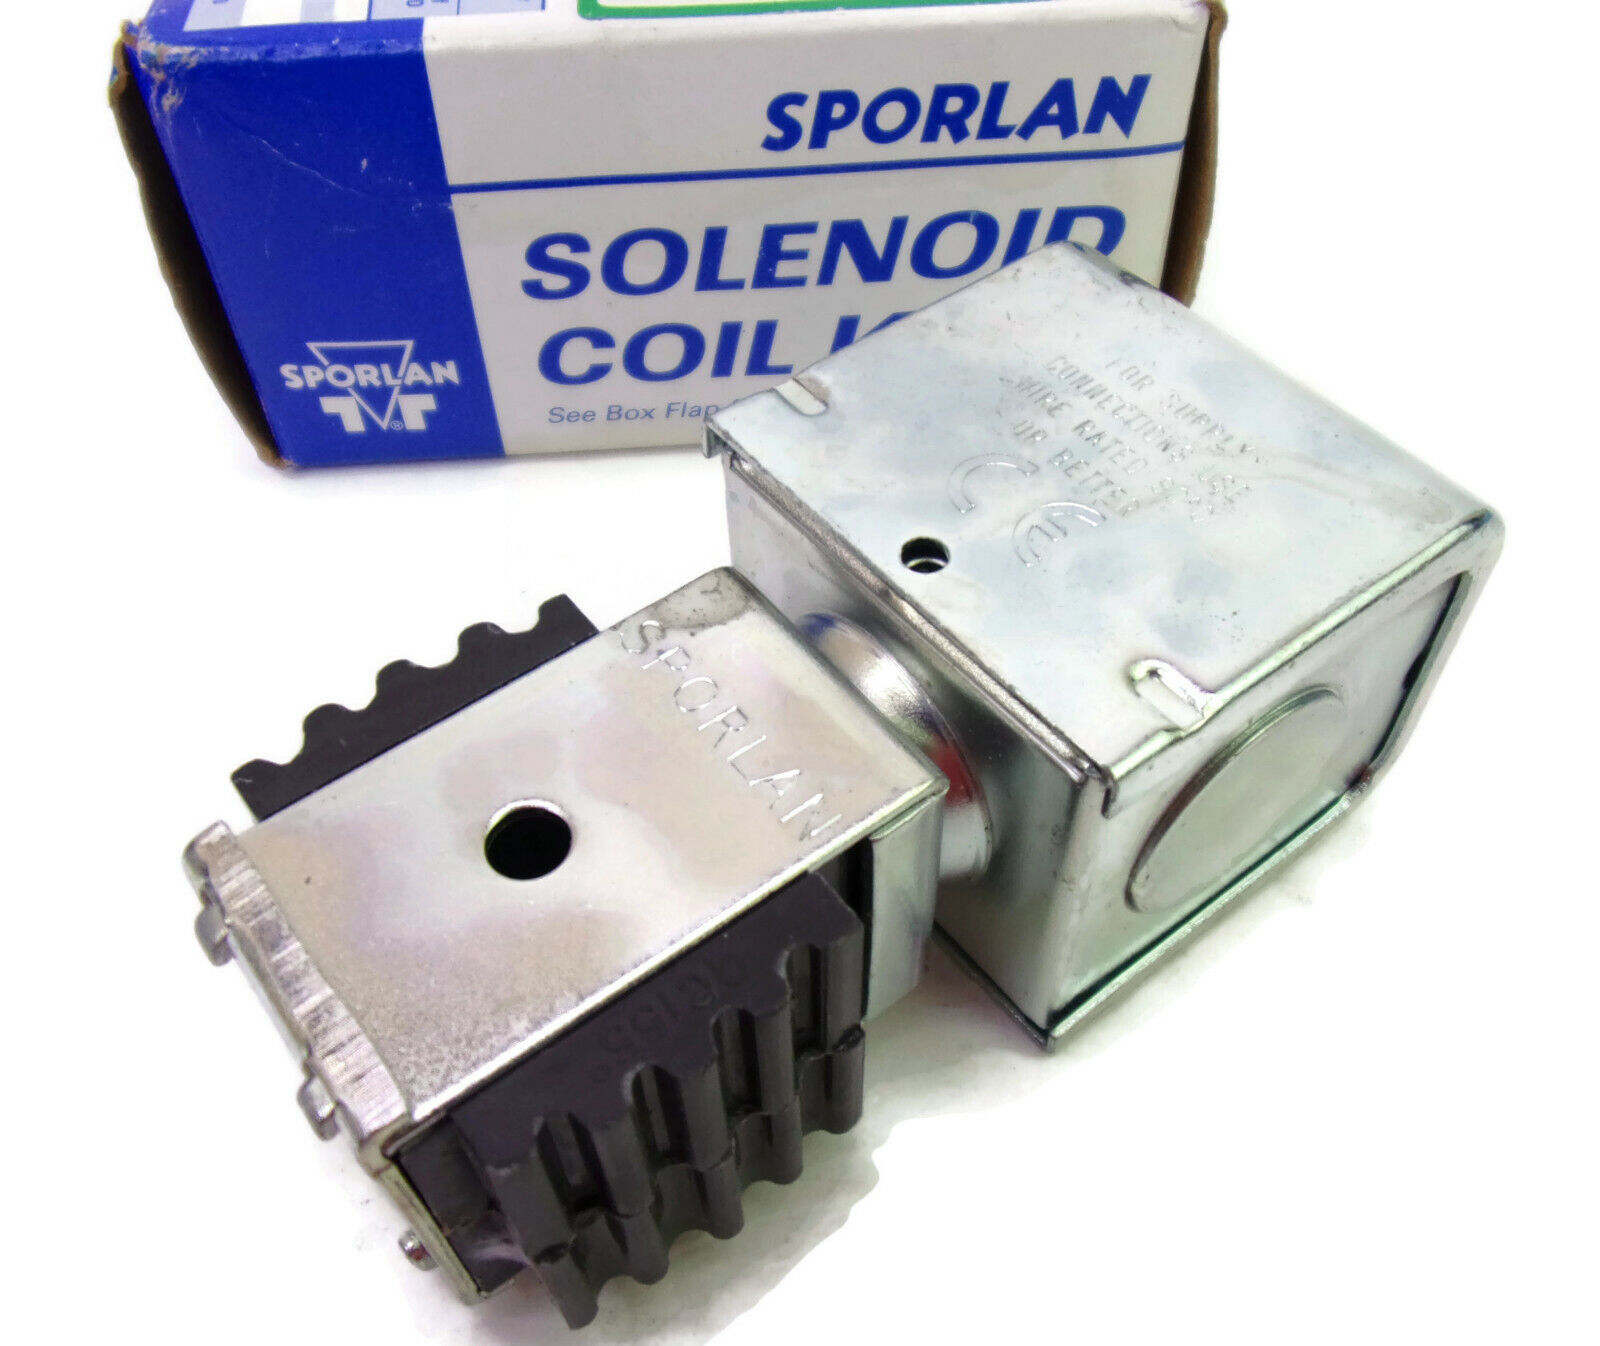 SPORLAN P/N MKC-1 (310286) SOLONOID COIL KIT 120/208/240VAC 10 WATTS NEW 